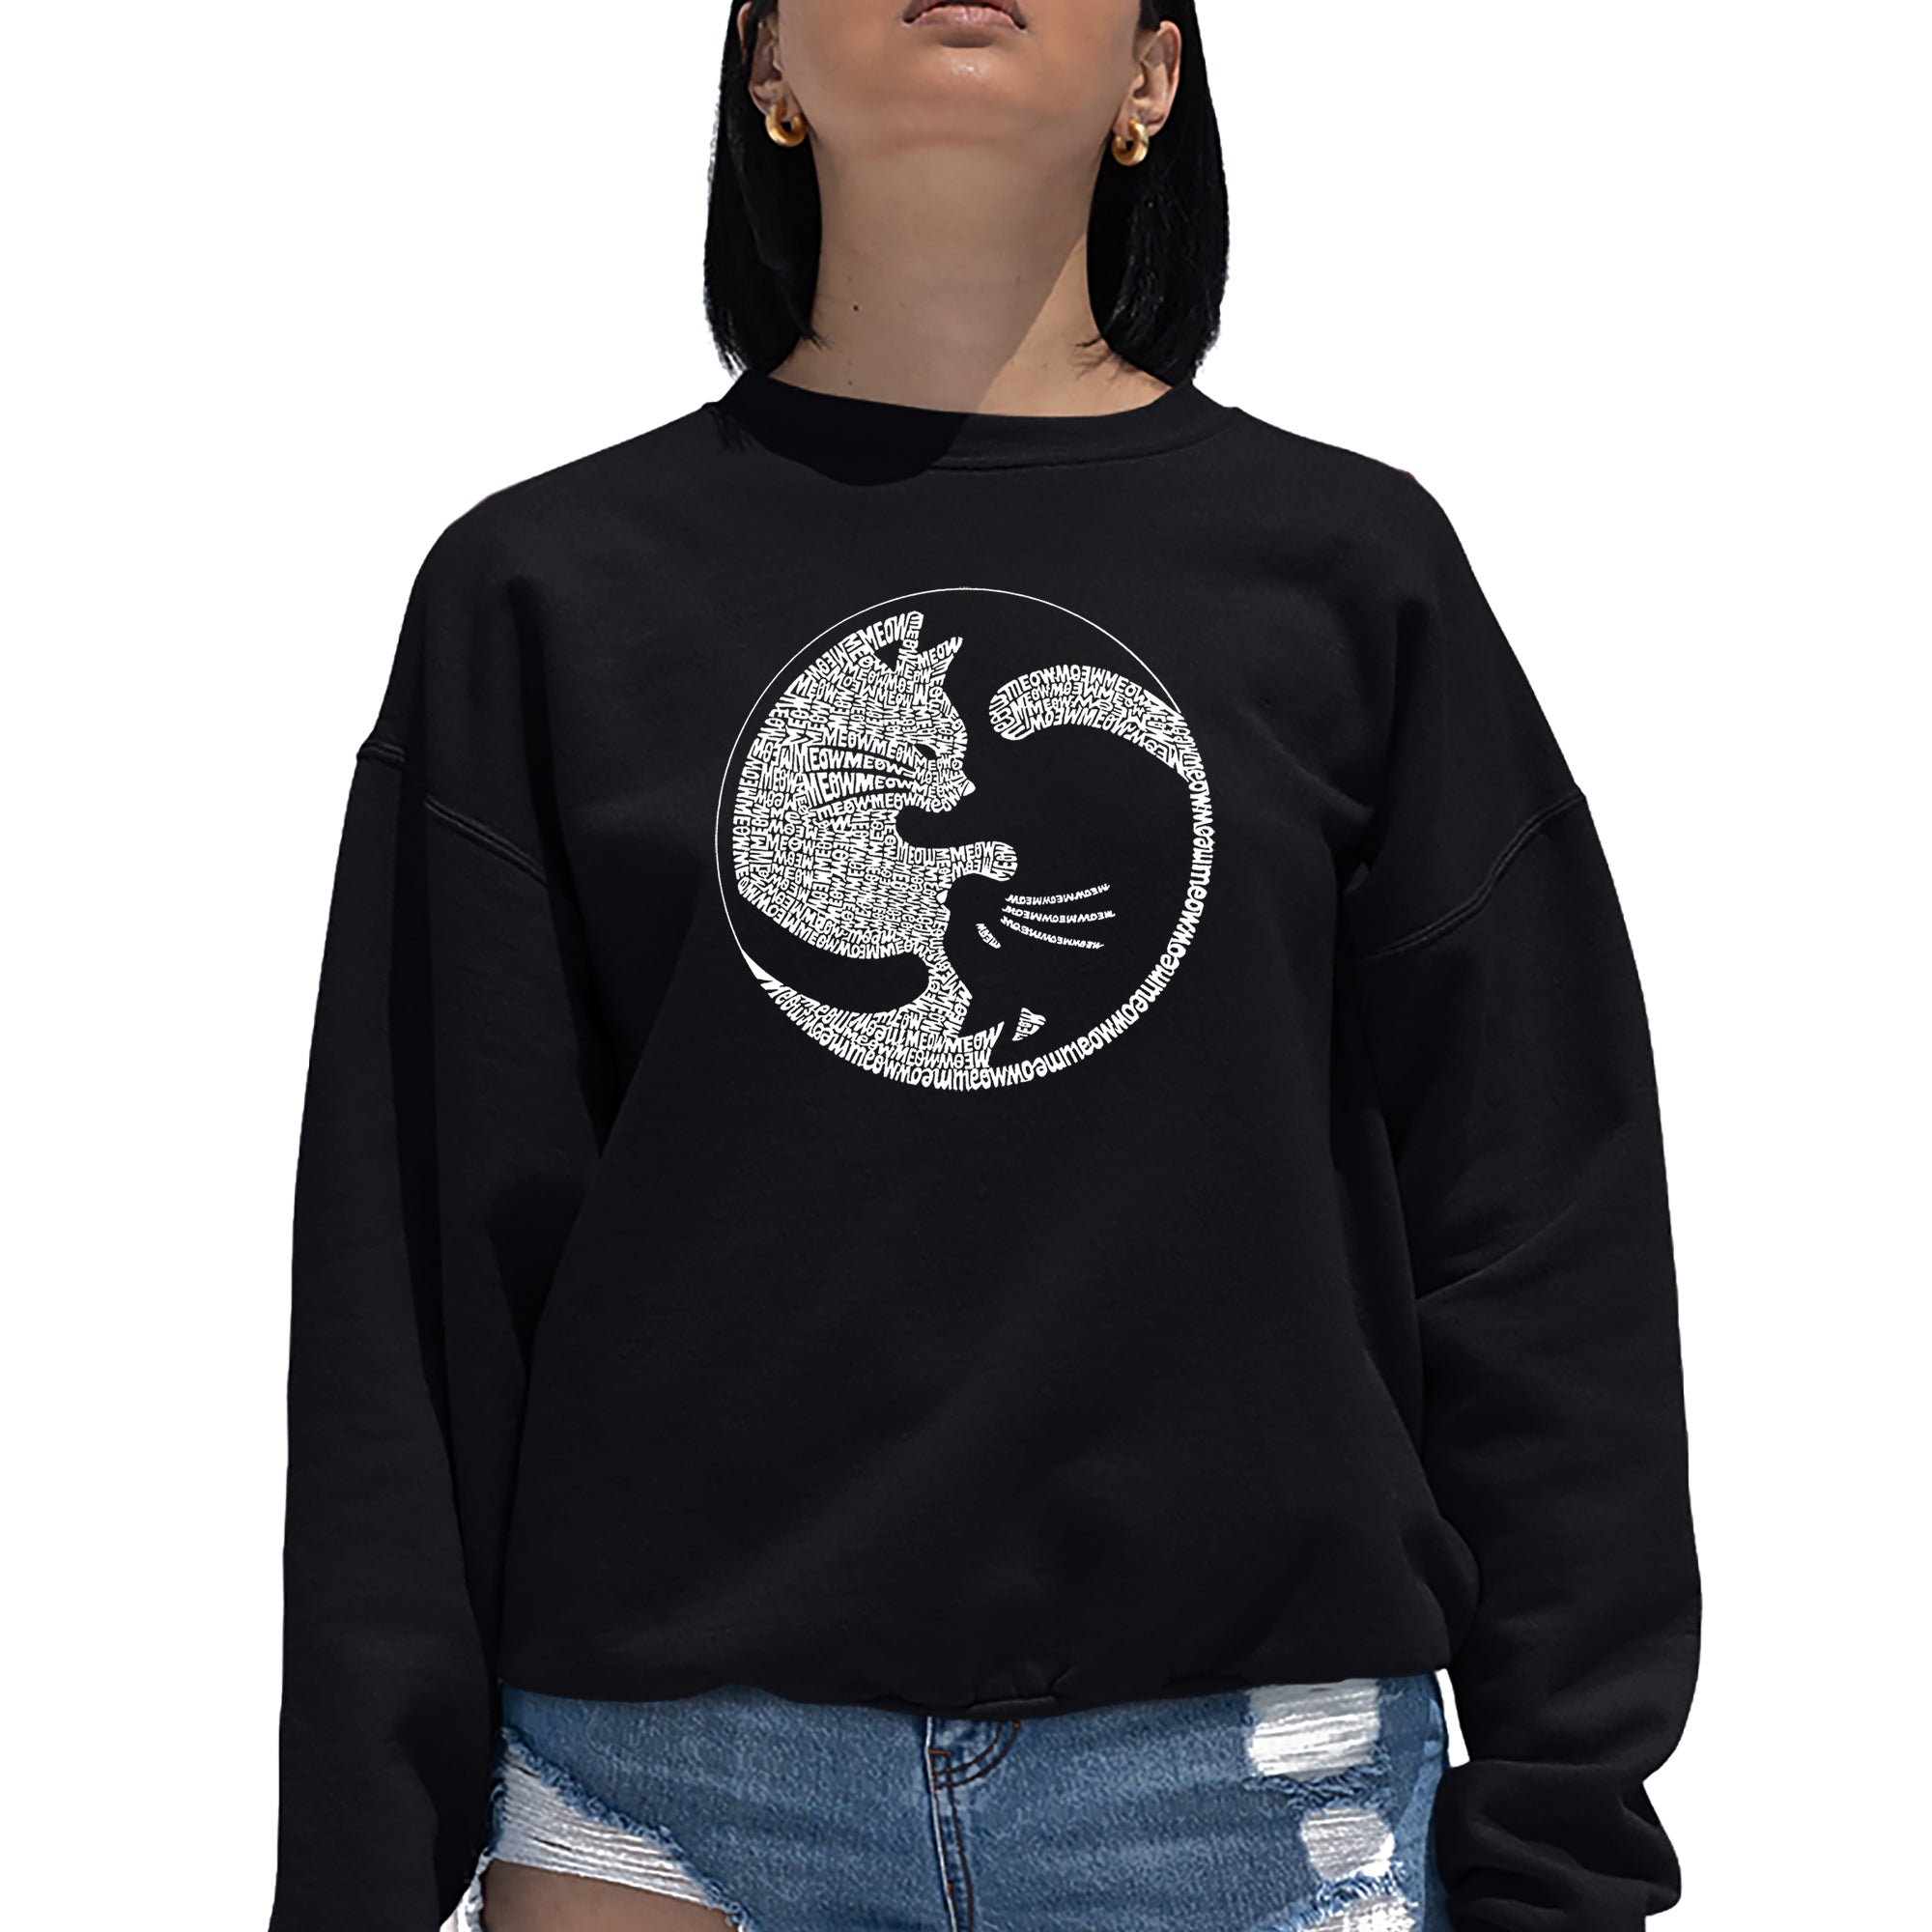 Yin Yang Cat Women's Word Art Crewneck Sweatshirt - Black - XXX-Large